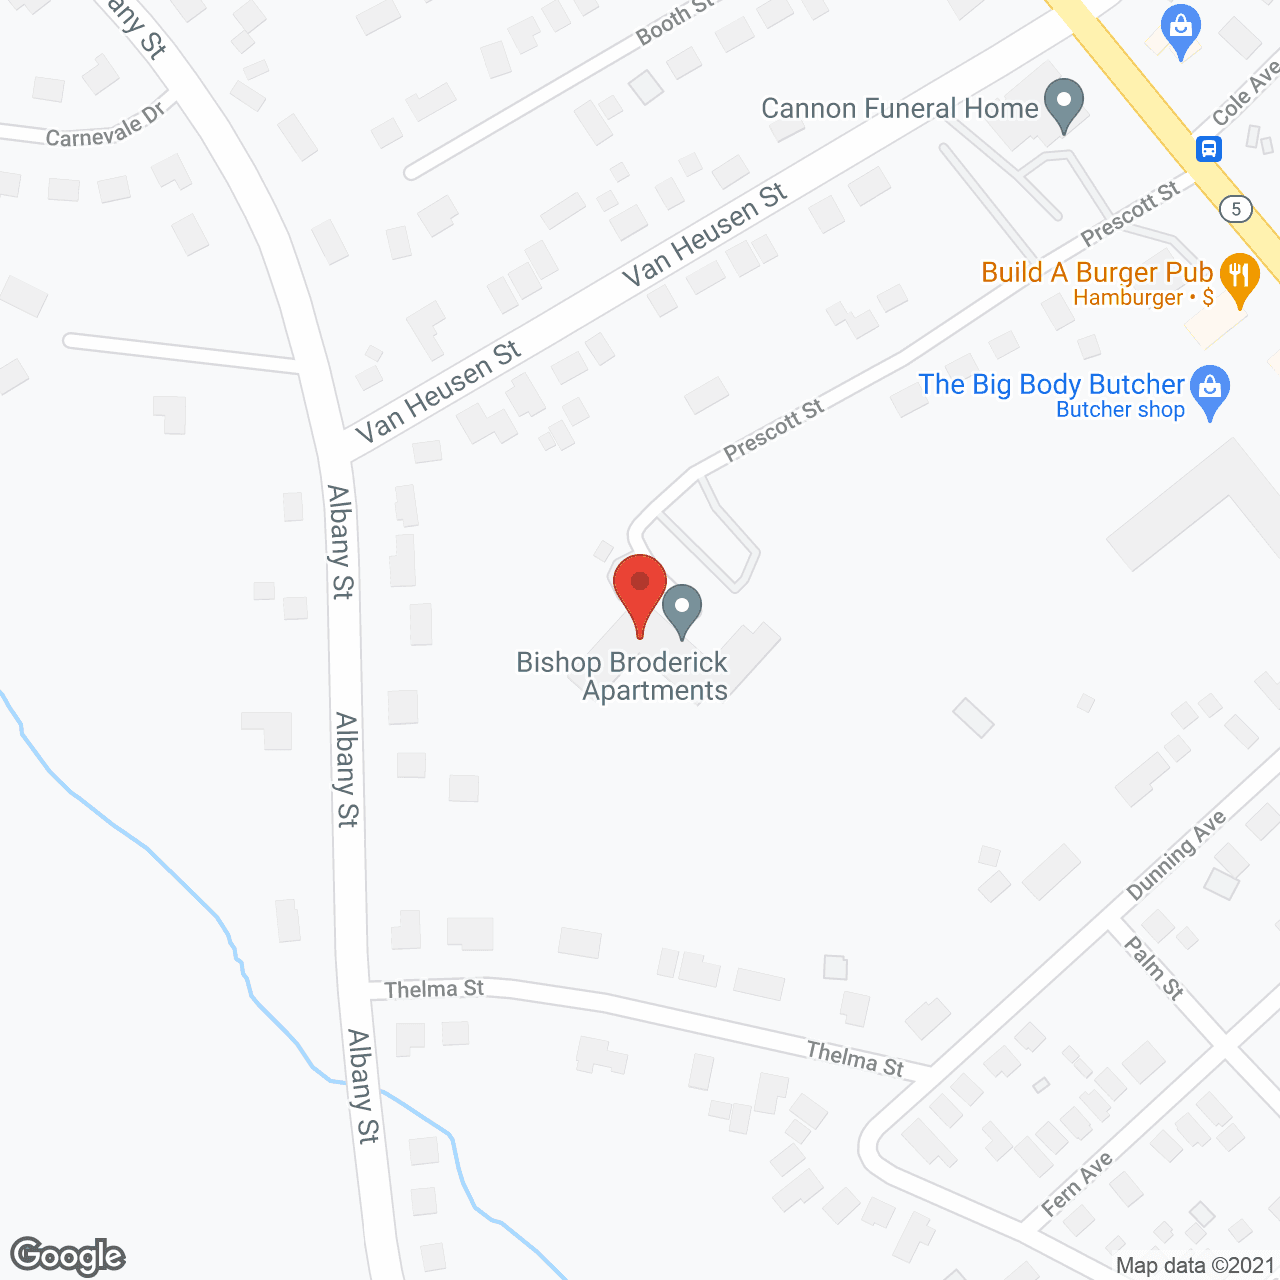 Bishop Broderick Apartments in google map